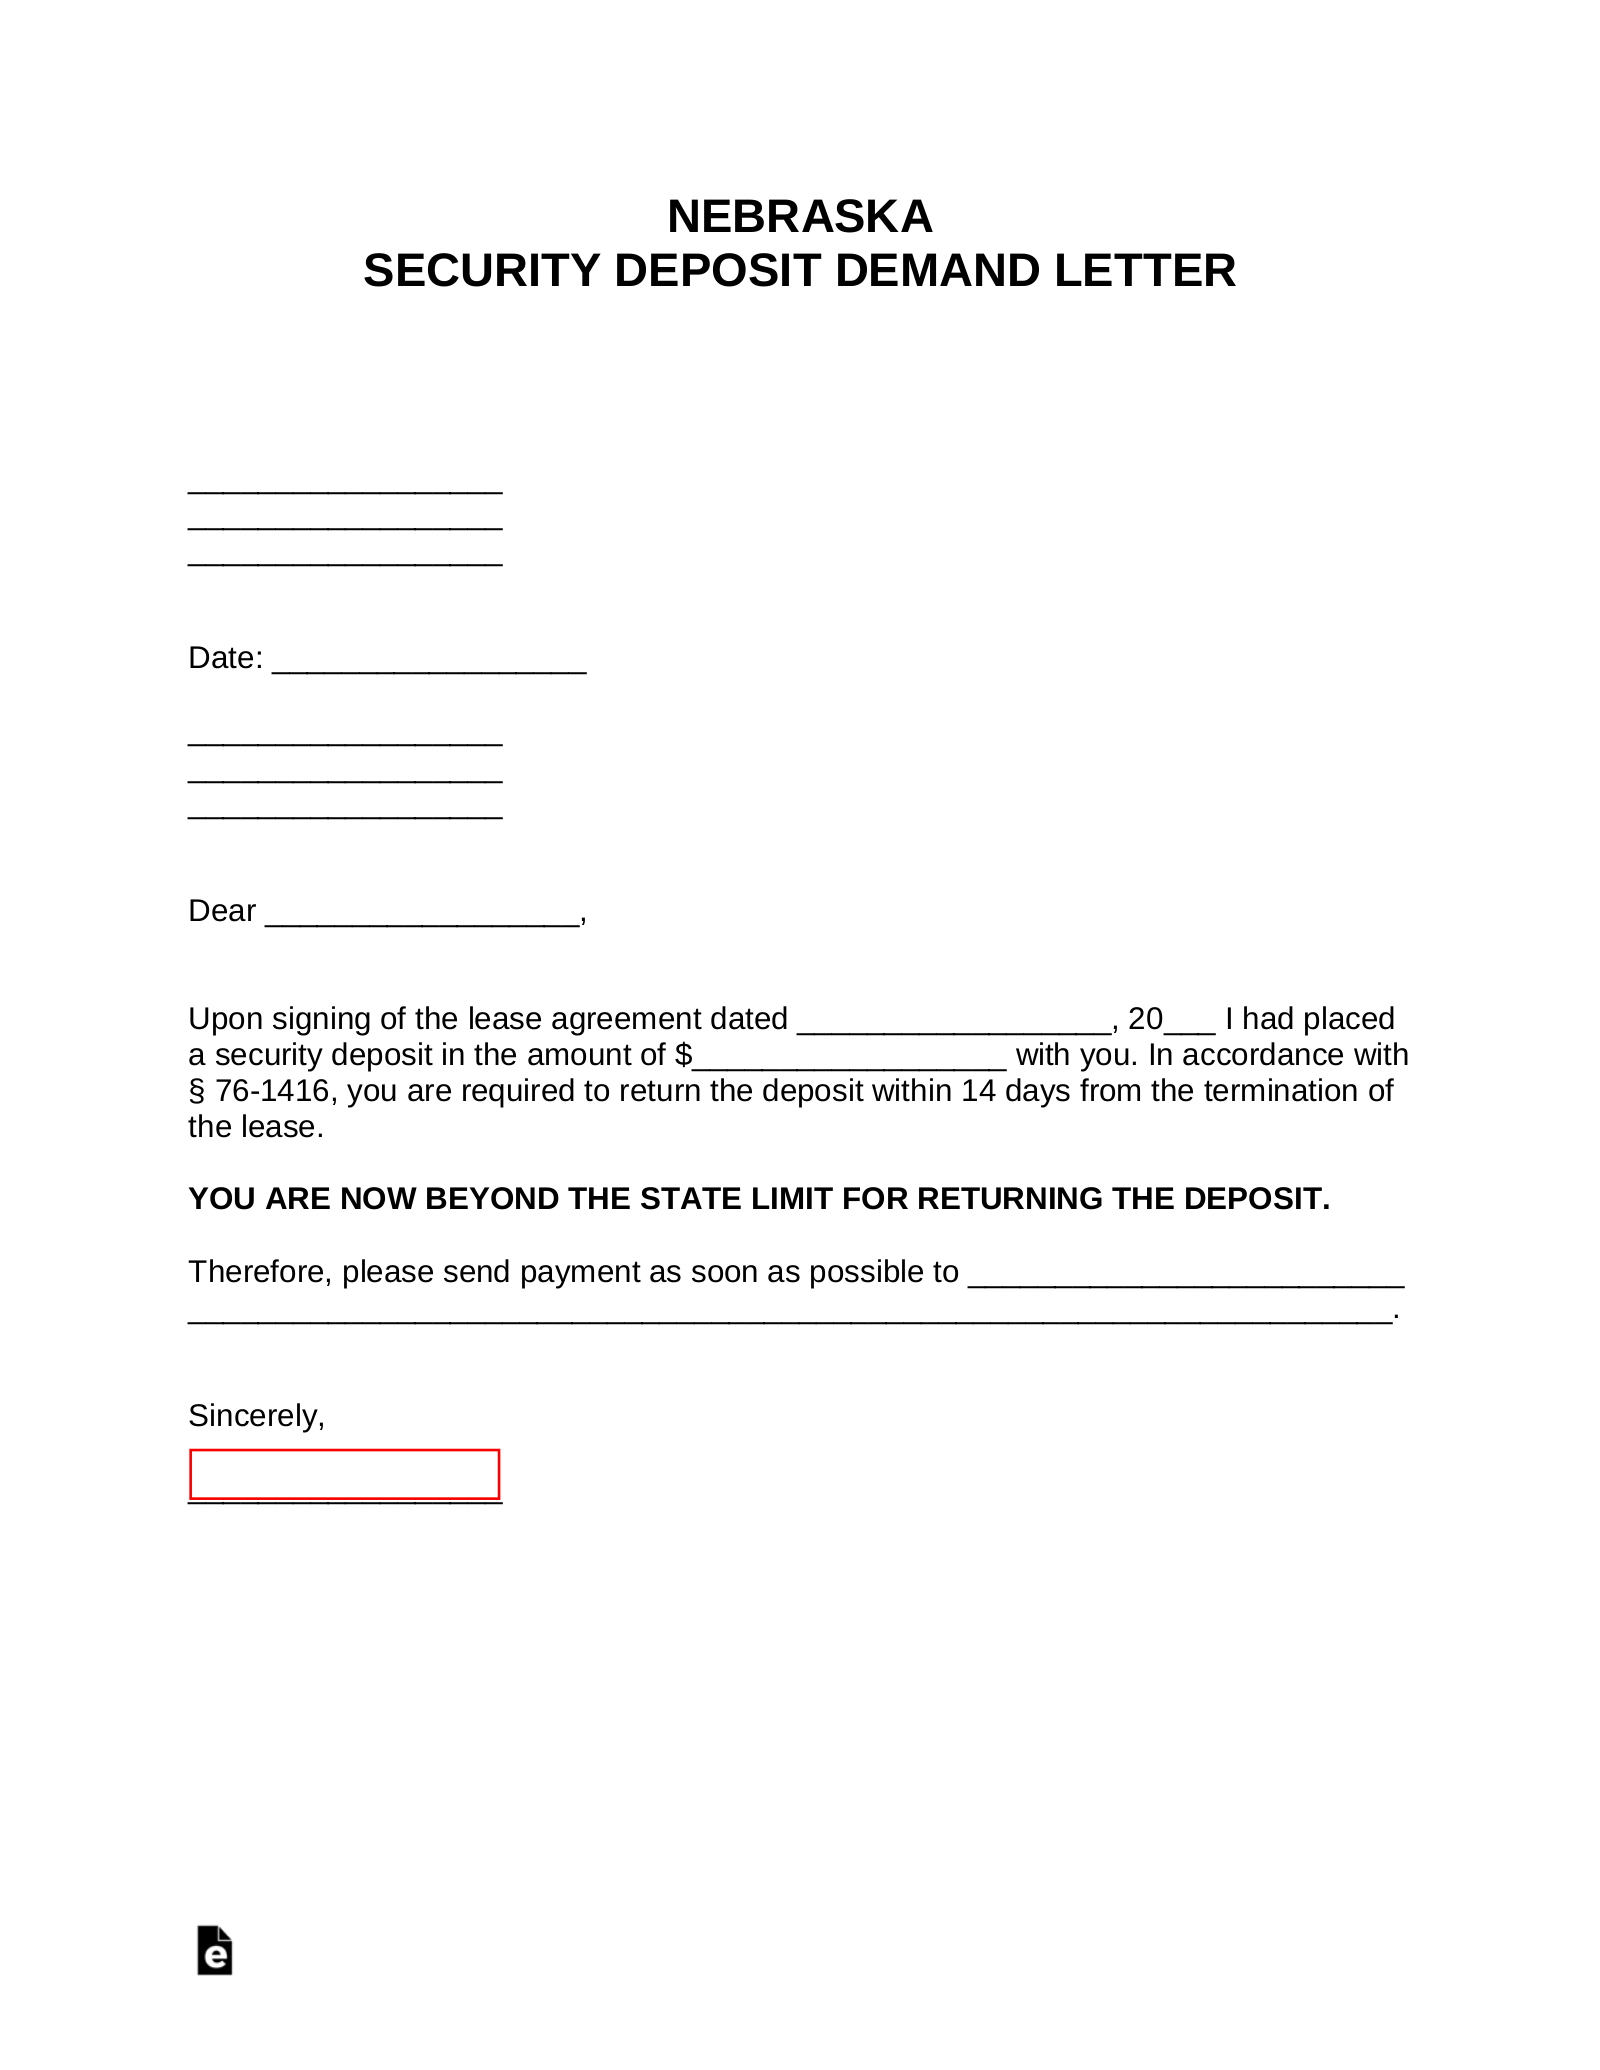 Nebraska Security Deposit Demand Letter